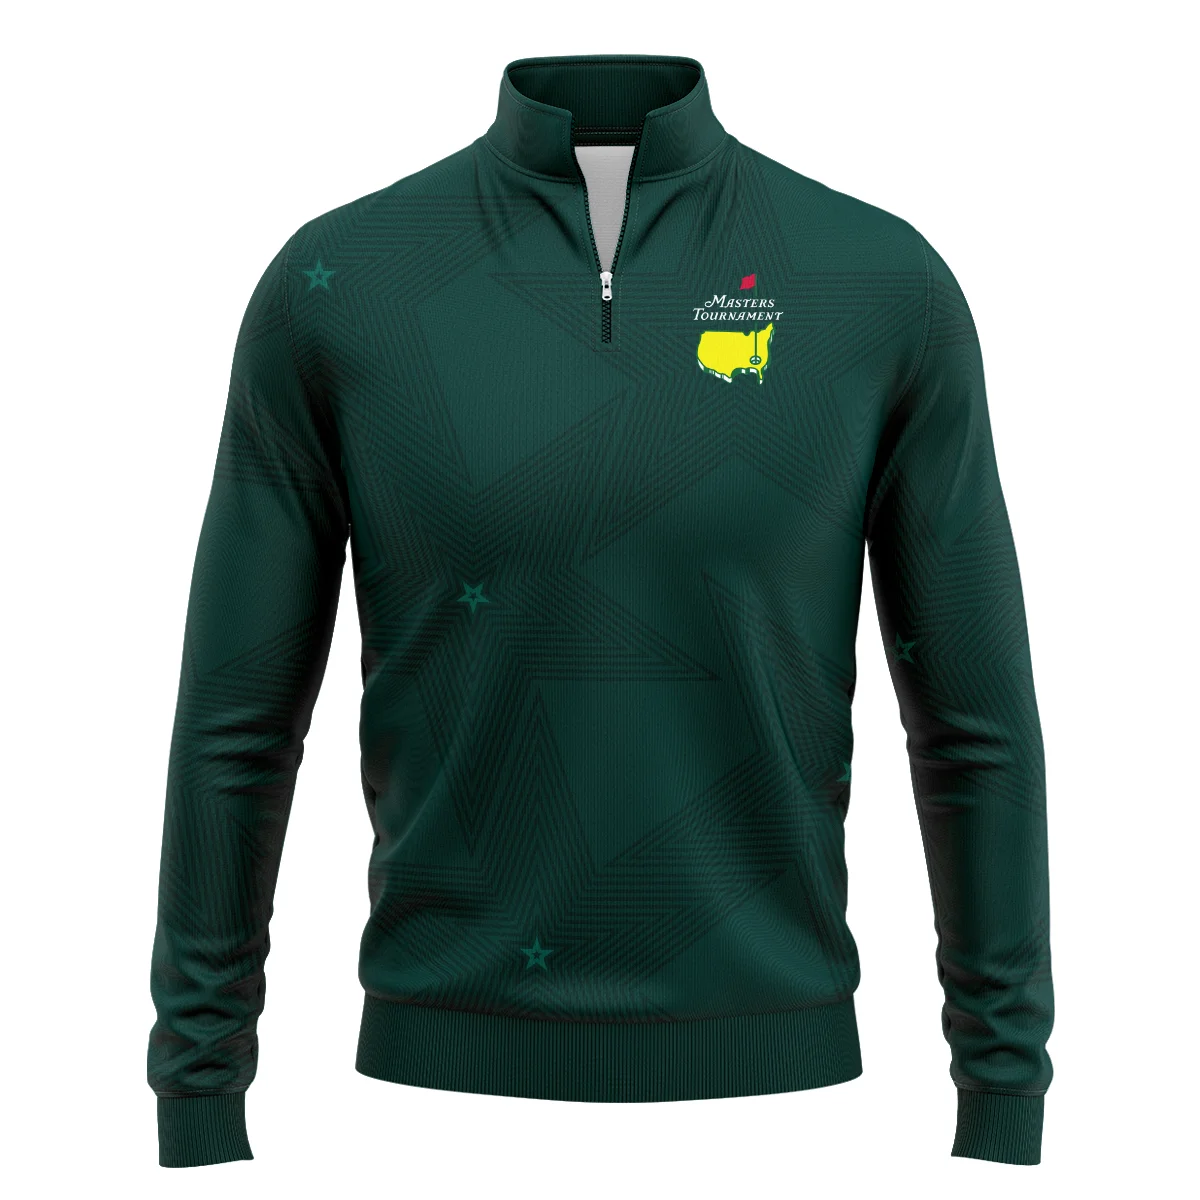 Stars Dark Green Golf Masters Tournament Polo Shirt Style Classic Polo Shirt For Men